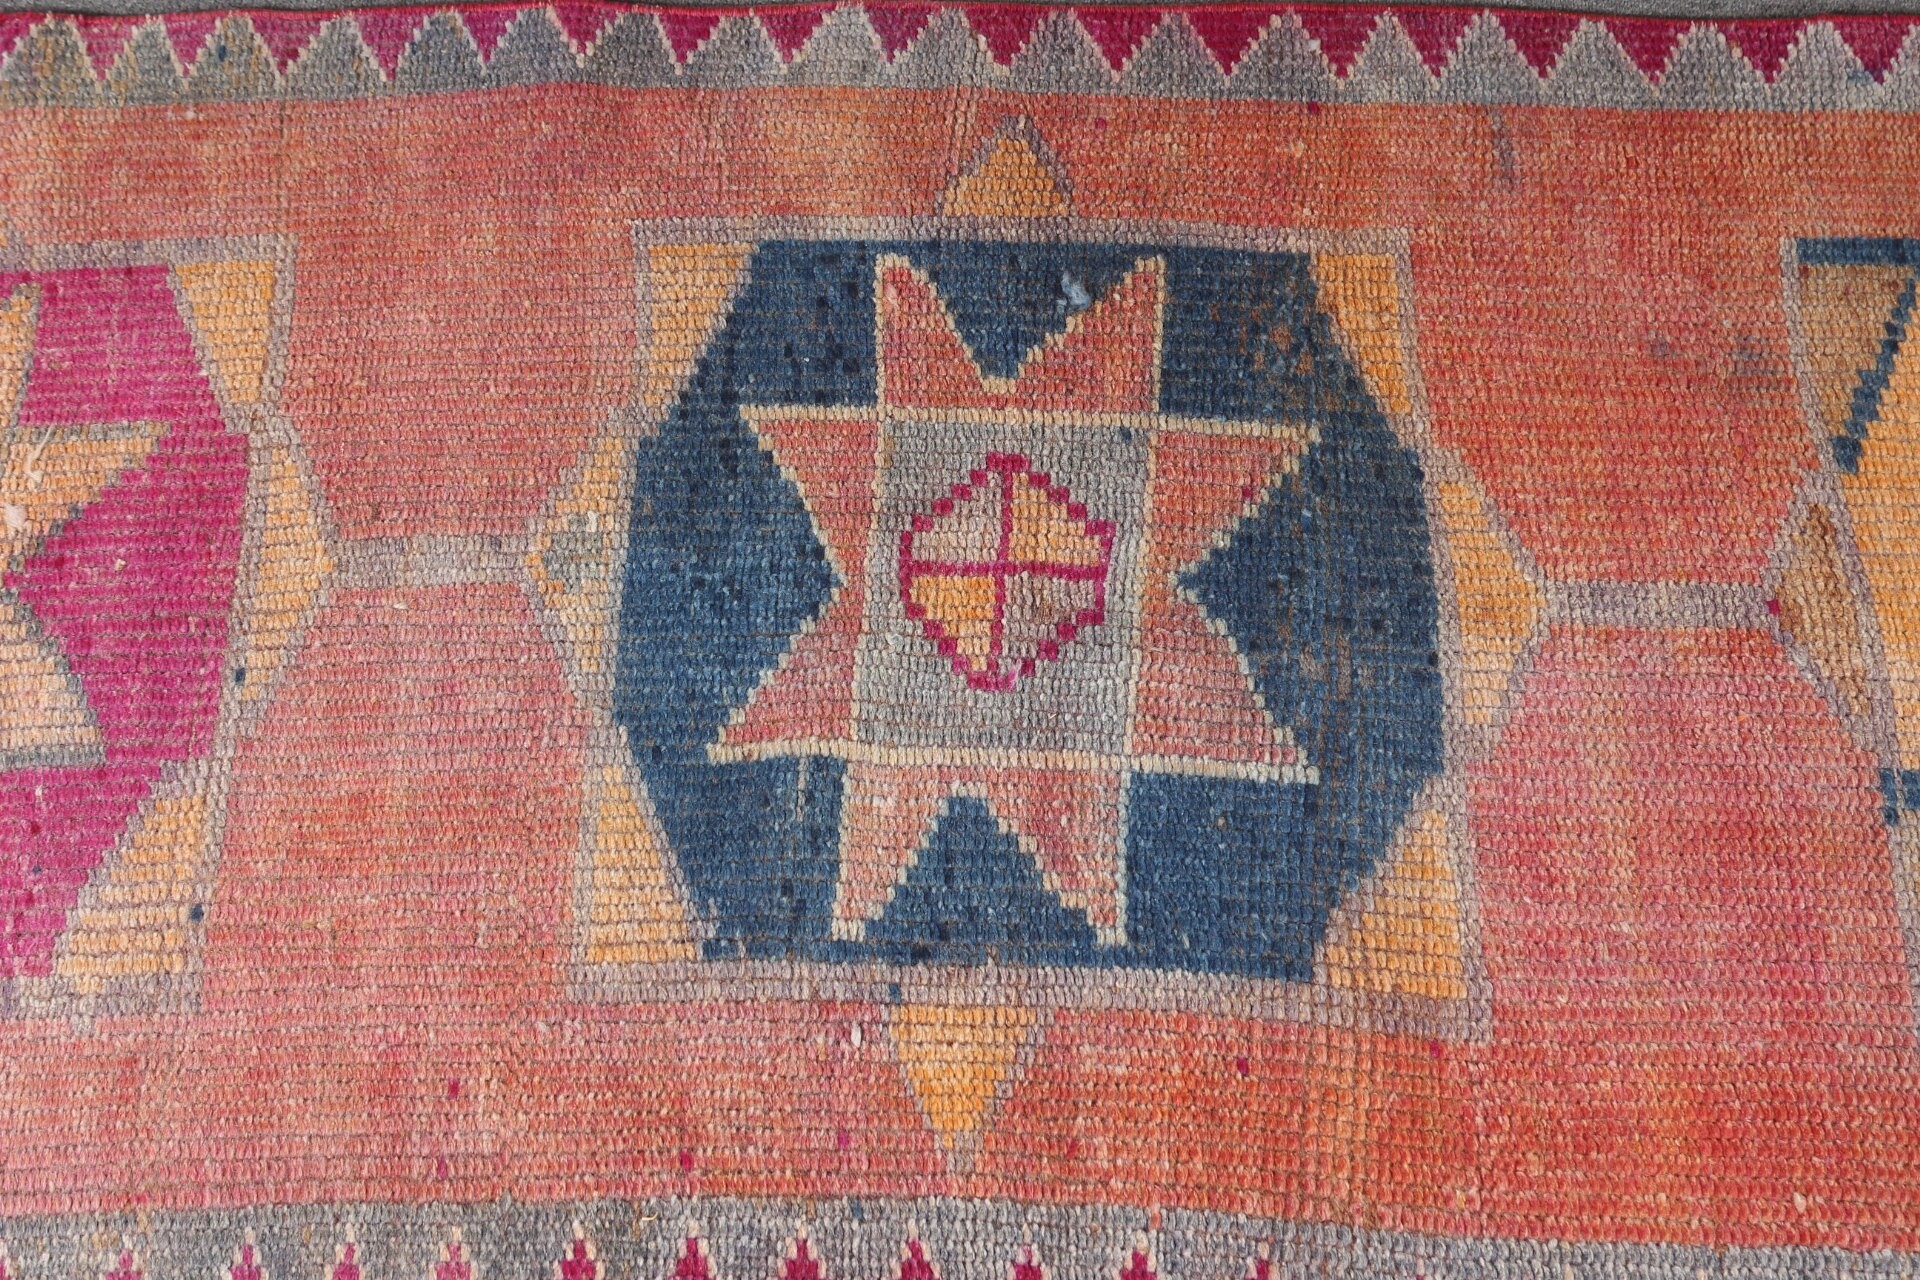 Oriental Rugs, Kitchen Rugs, Pink Home Decor Rug, Turkish Rugs, Moroccan Rug, Eclectic Rugs, Vintage Rug, Hallway Rug, 2.6x11 ft Runner Rug